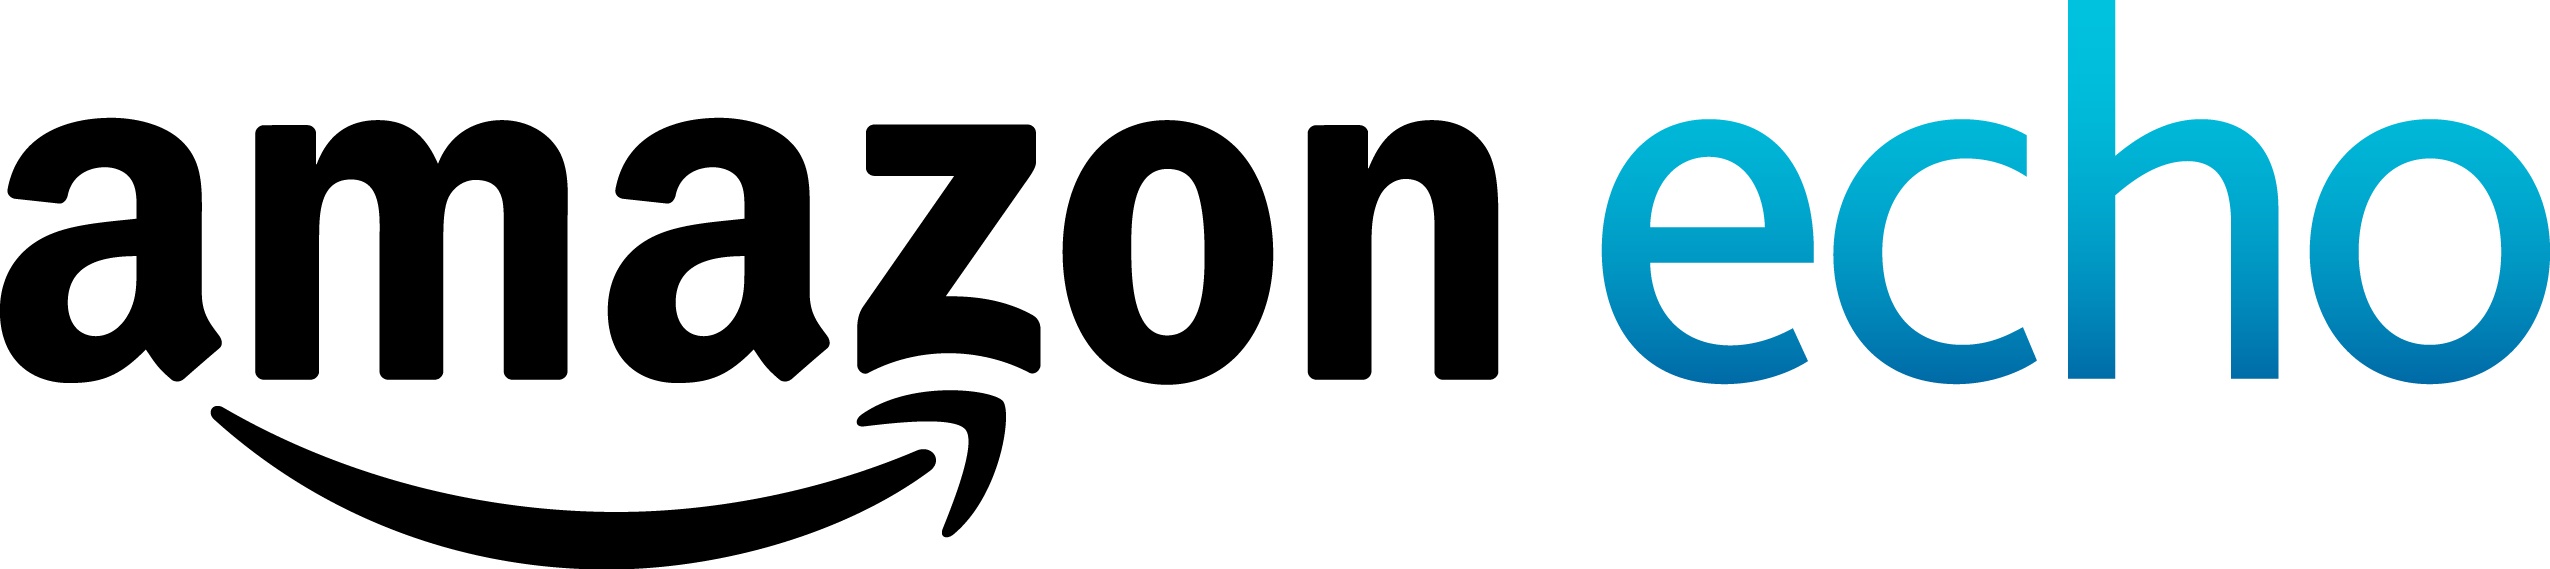 Download (Jpg), 122 Kb - Amazon Badges Vector, Transparent background PNG HD thumbnail